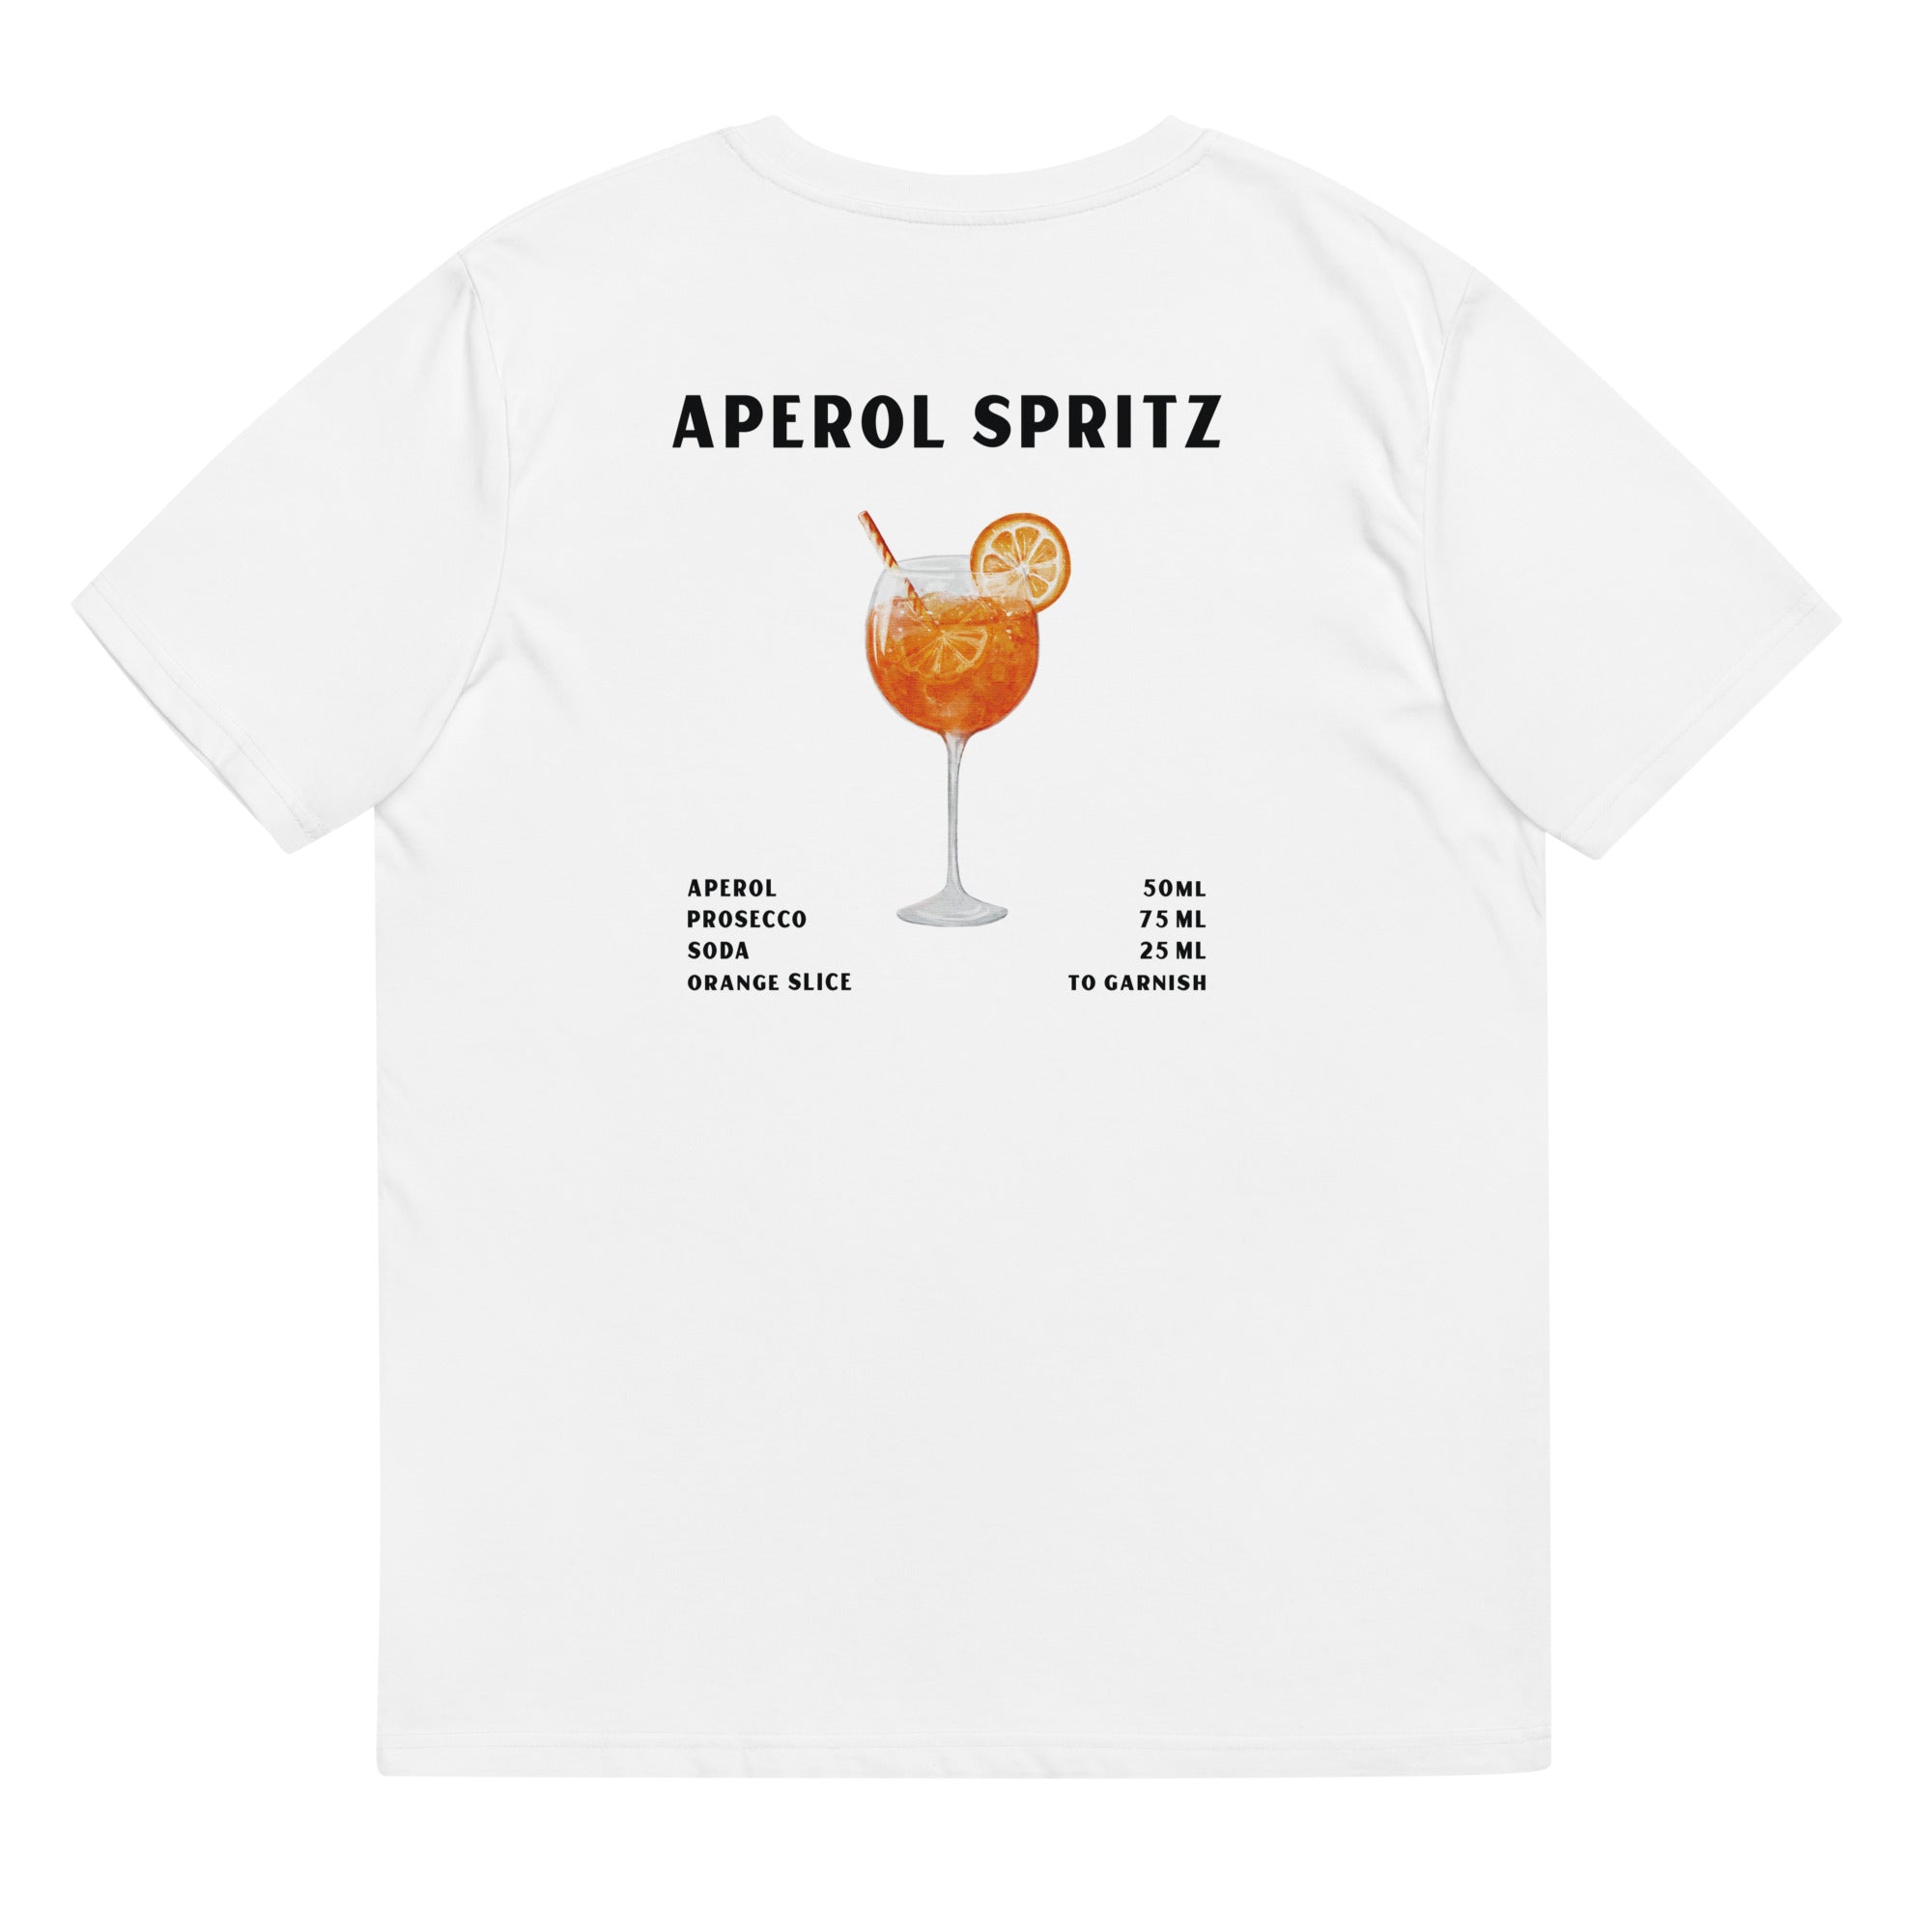 Aperol Spritz - Organic T-shirt - The Refined Spirit